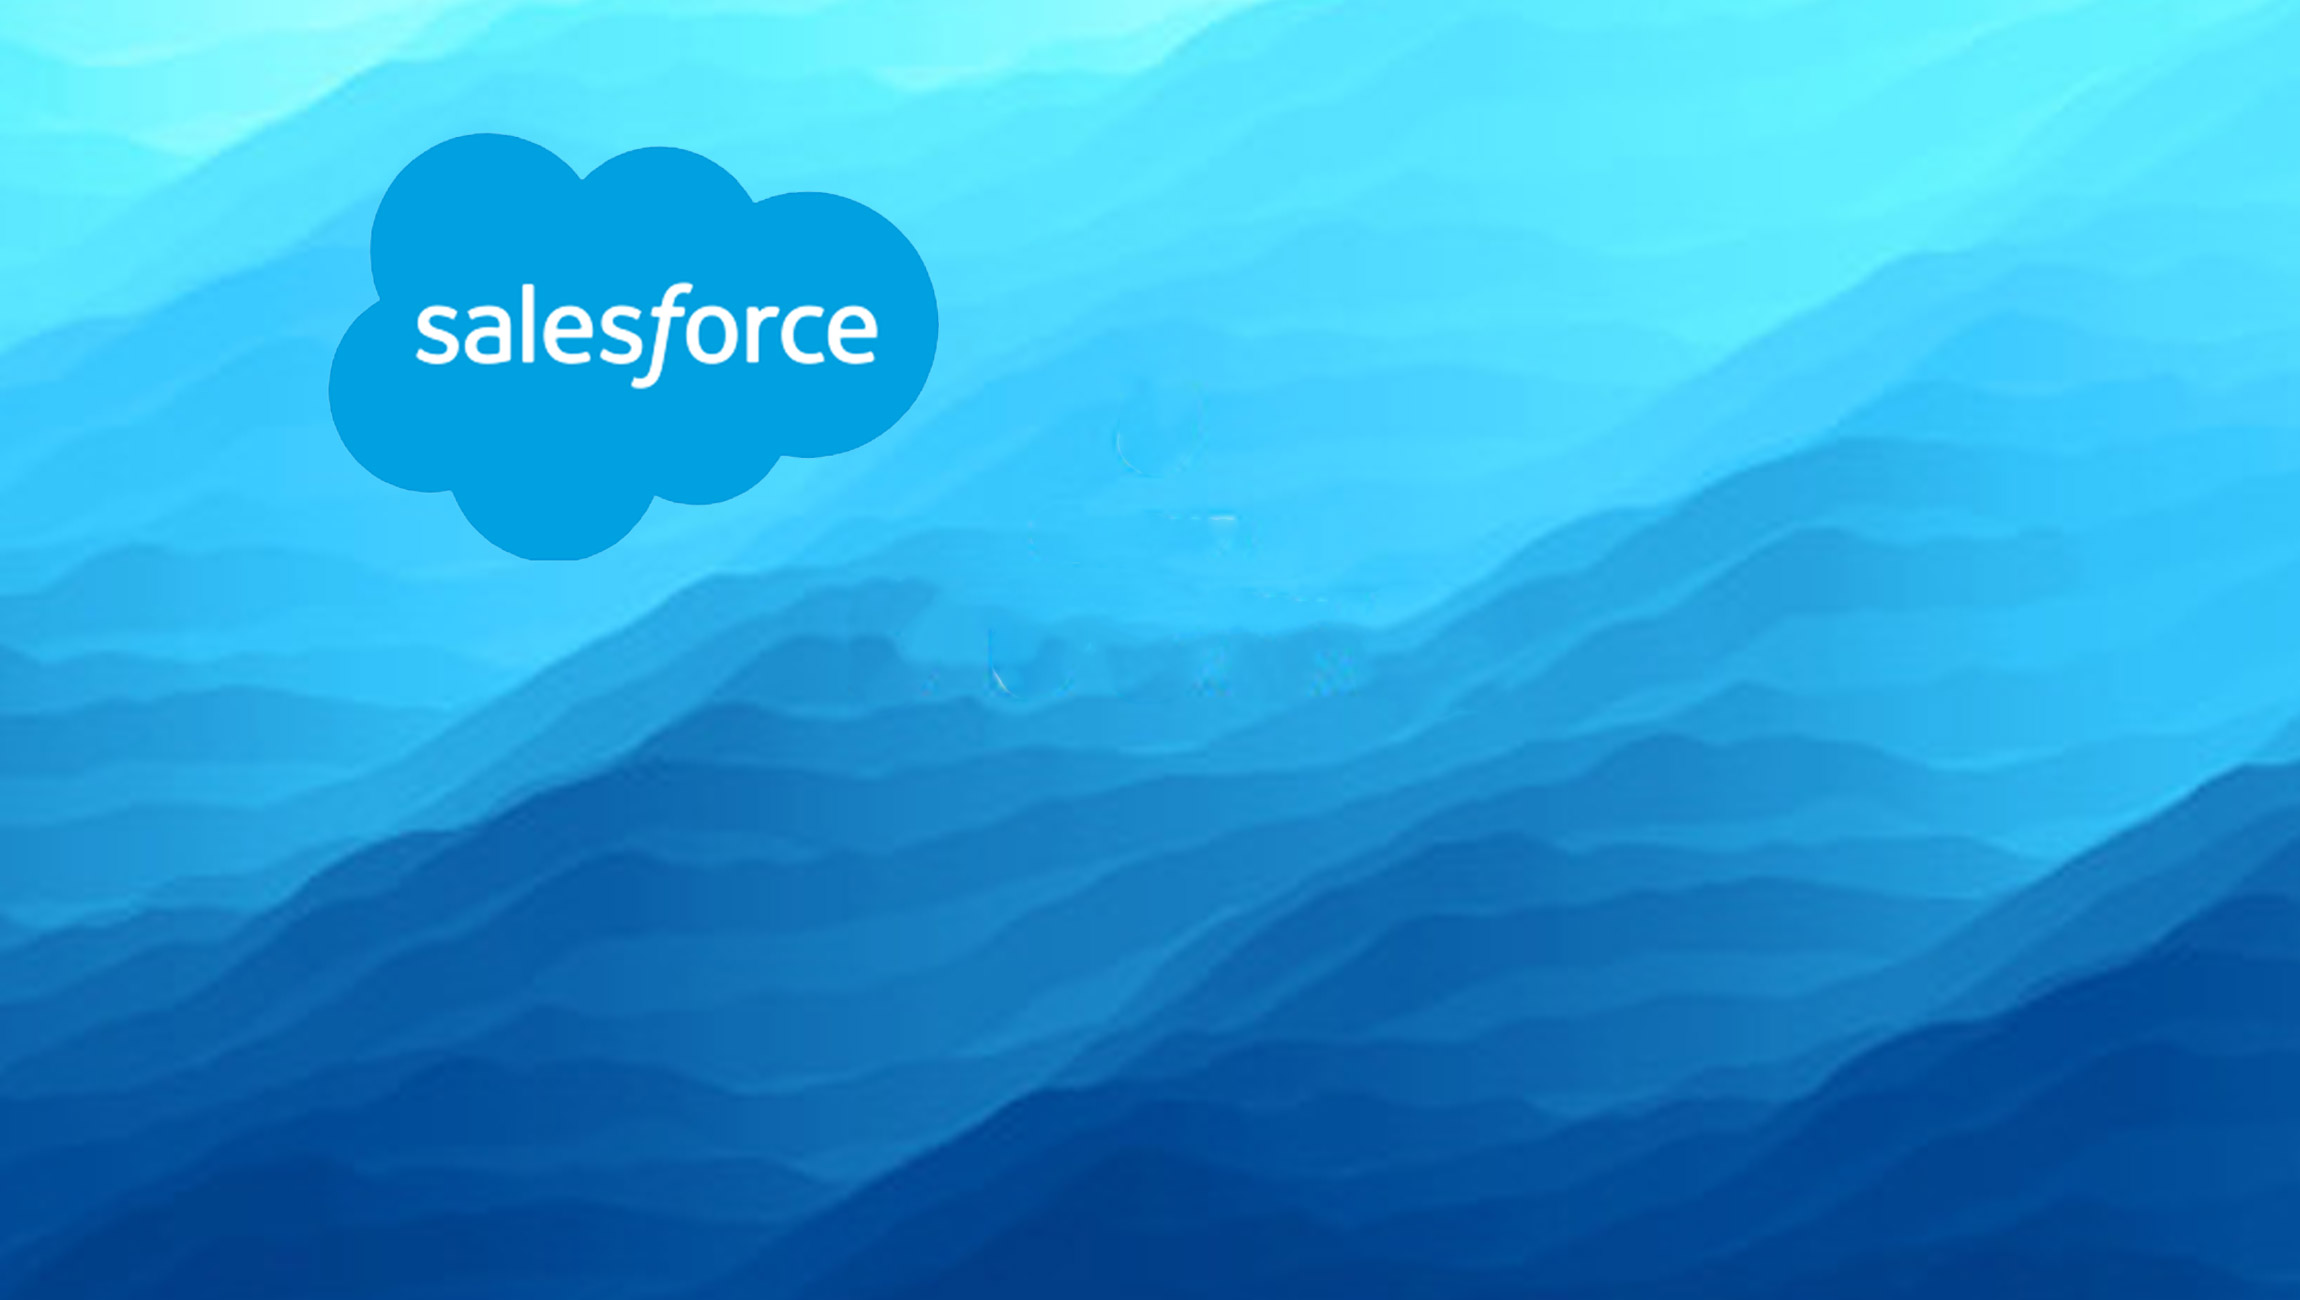 Salesforce Background Images